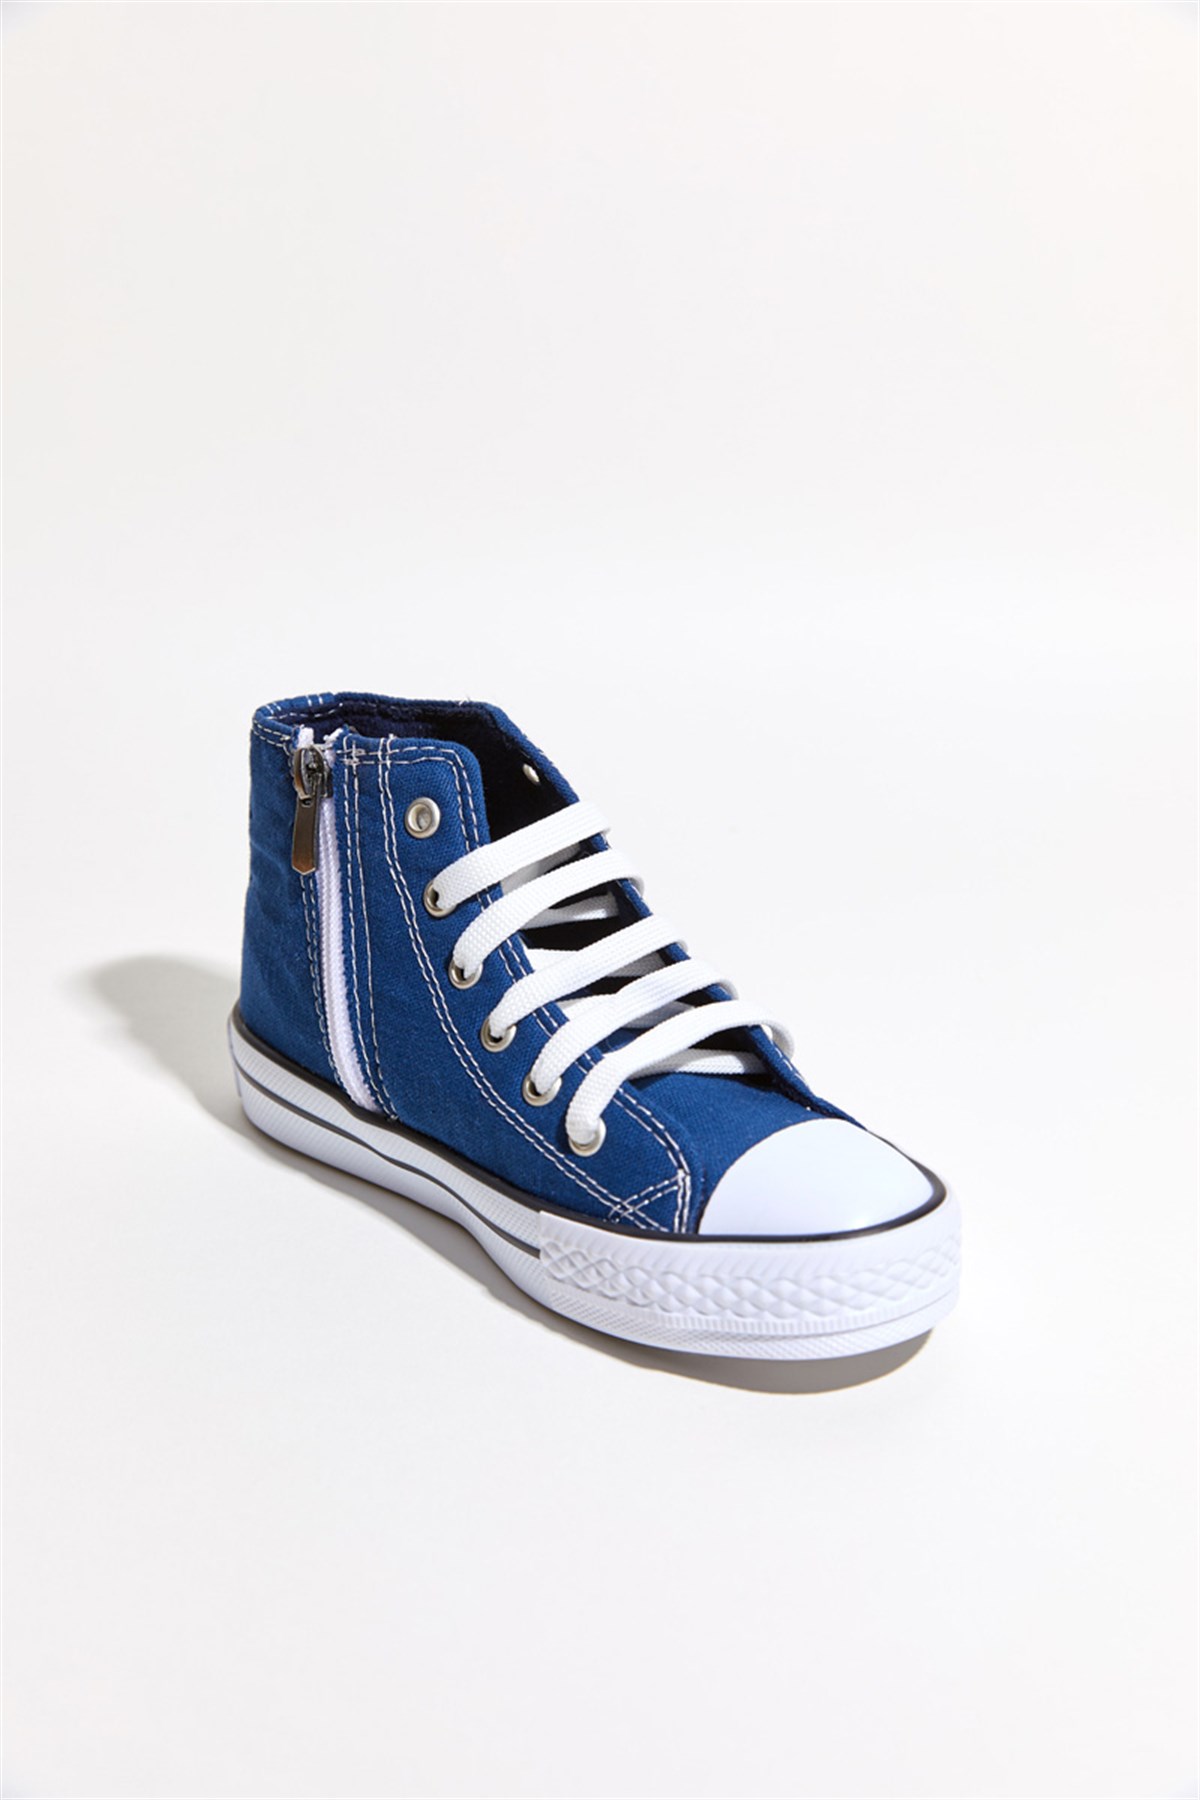 22-35 Numara Dudino Icon-Space Mavi Erkek Converse Ayakkabı